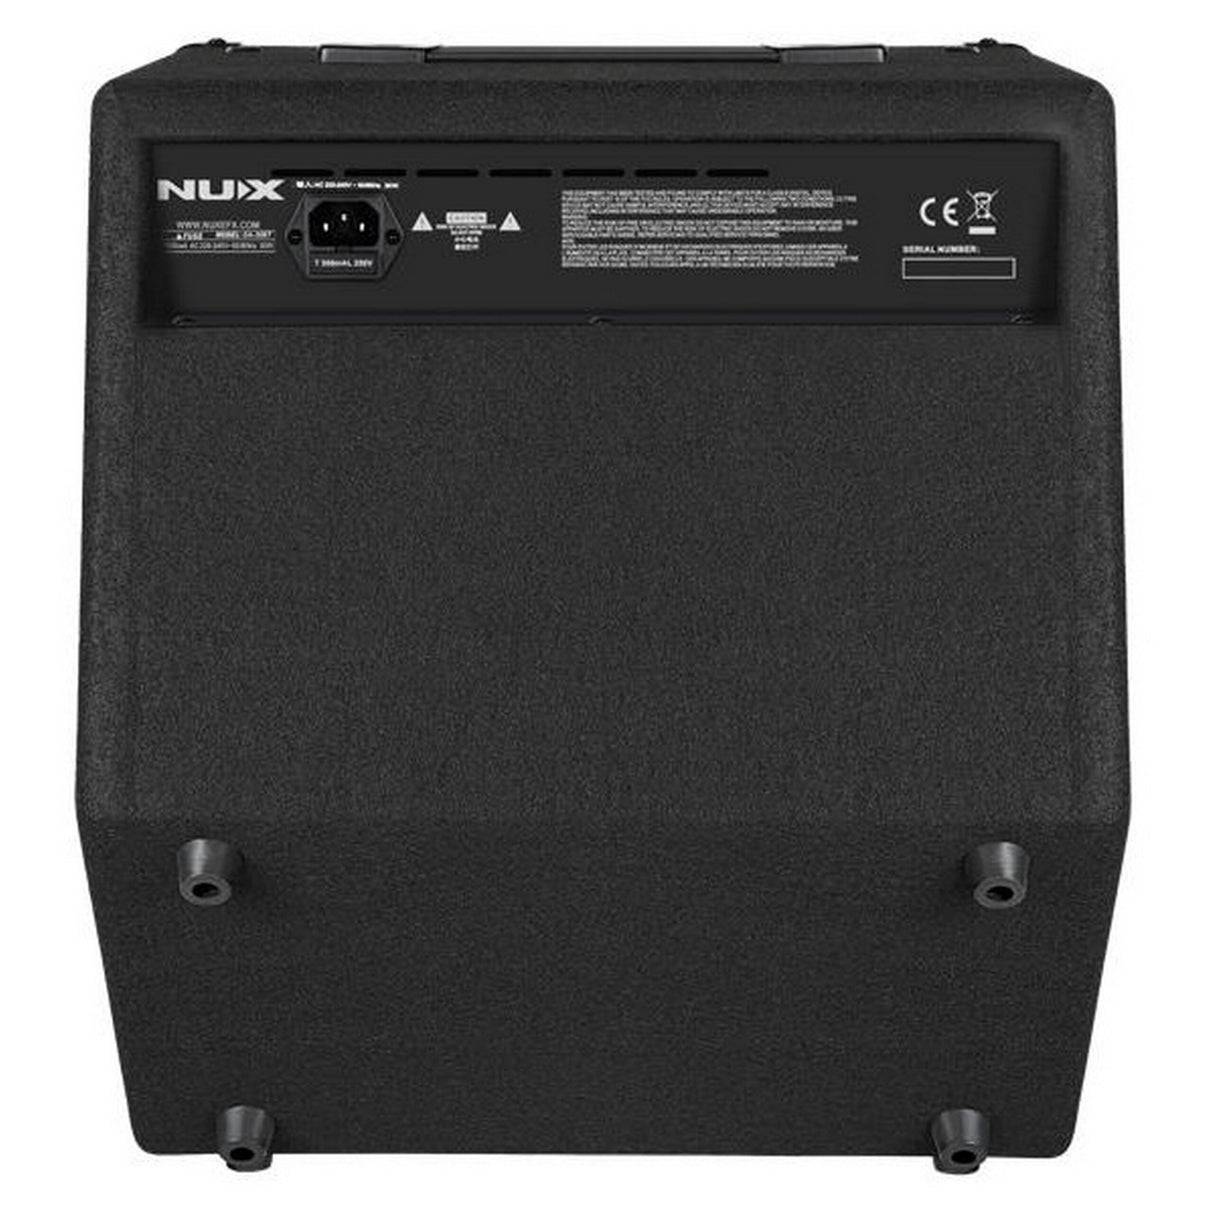 NUX DA-30BT Bluetooth Personal Monitor Amplifier, 30W